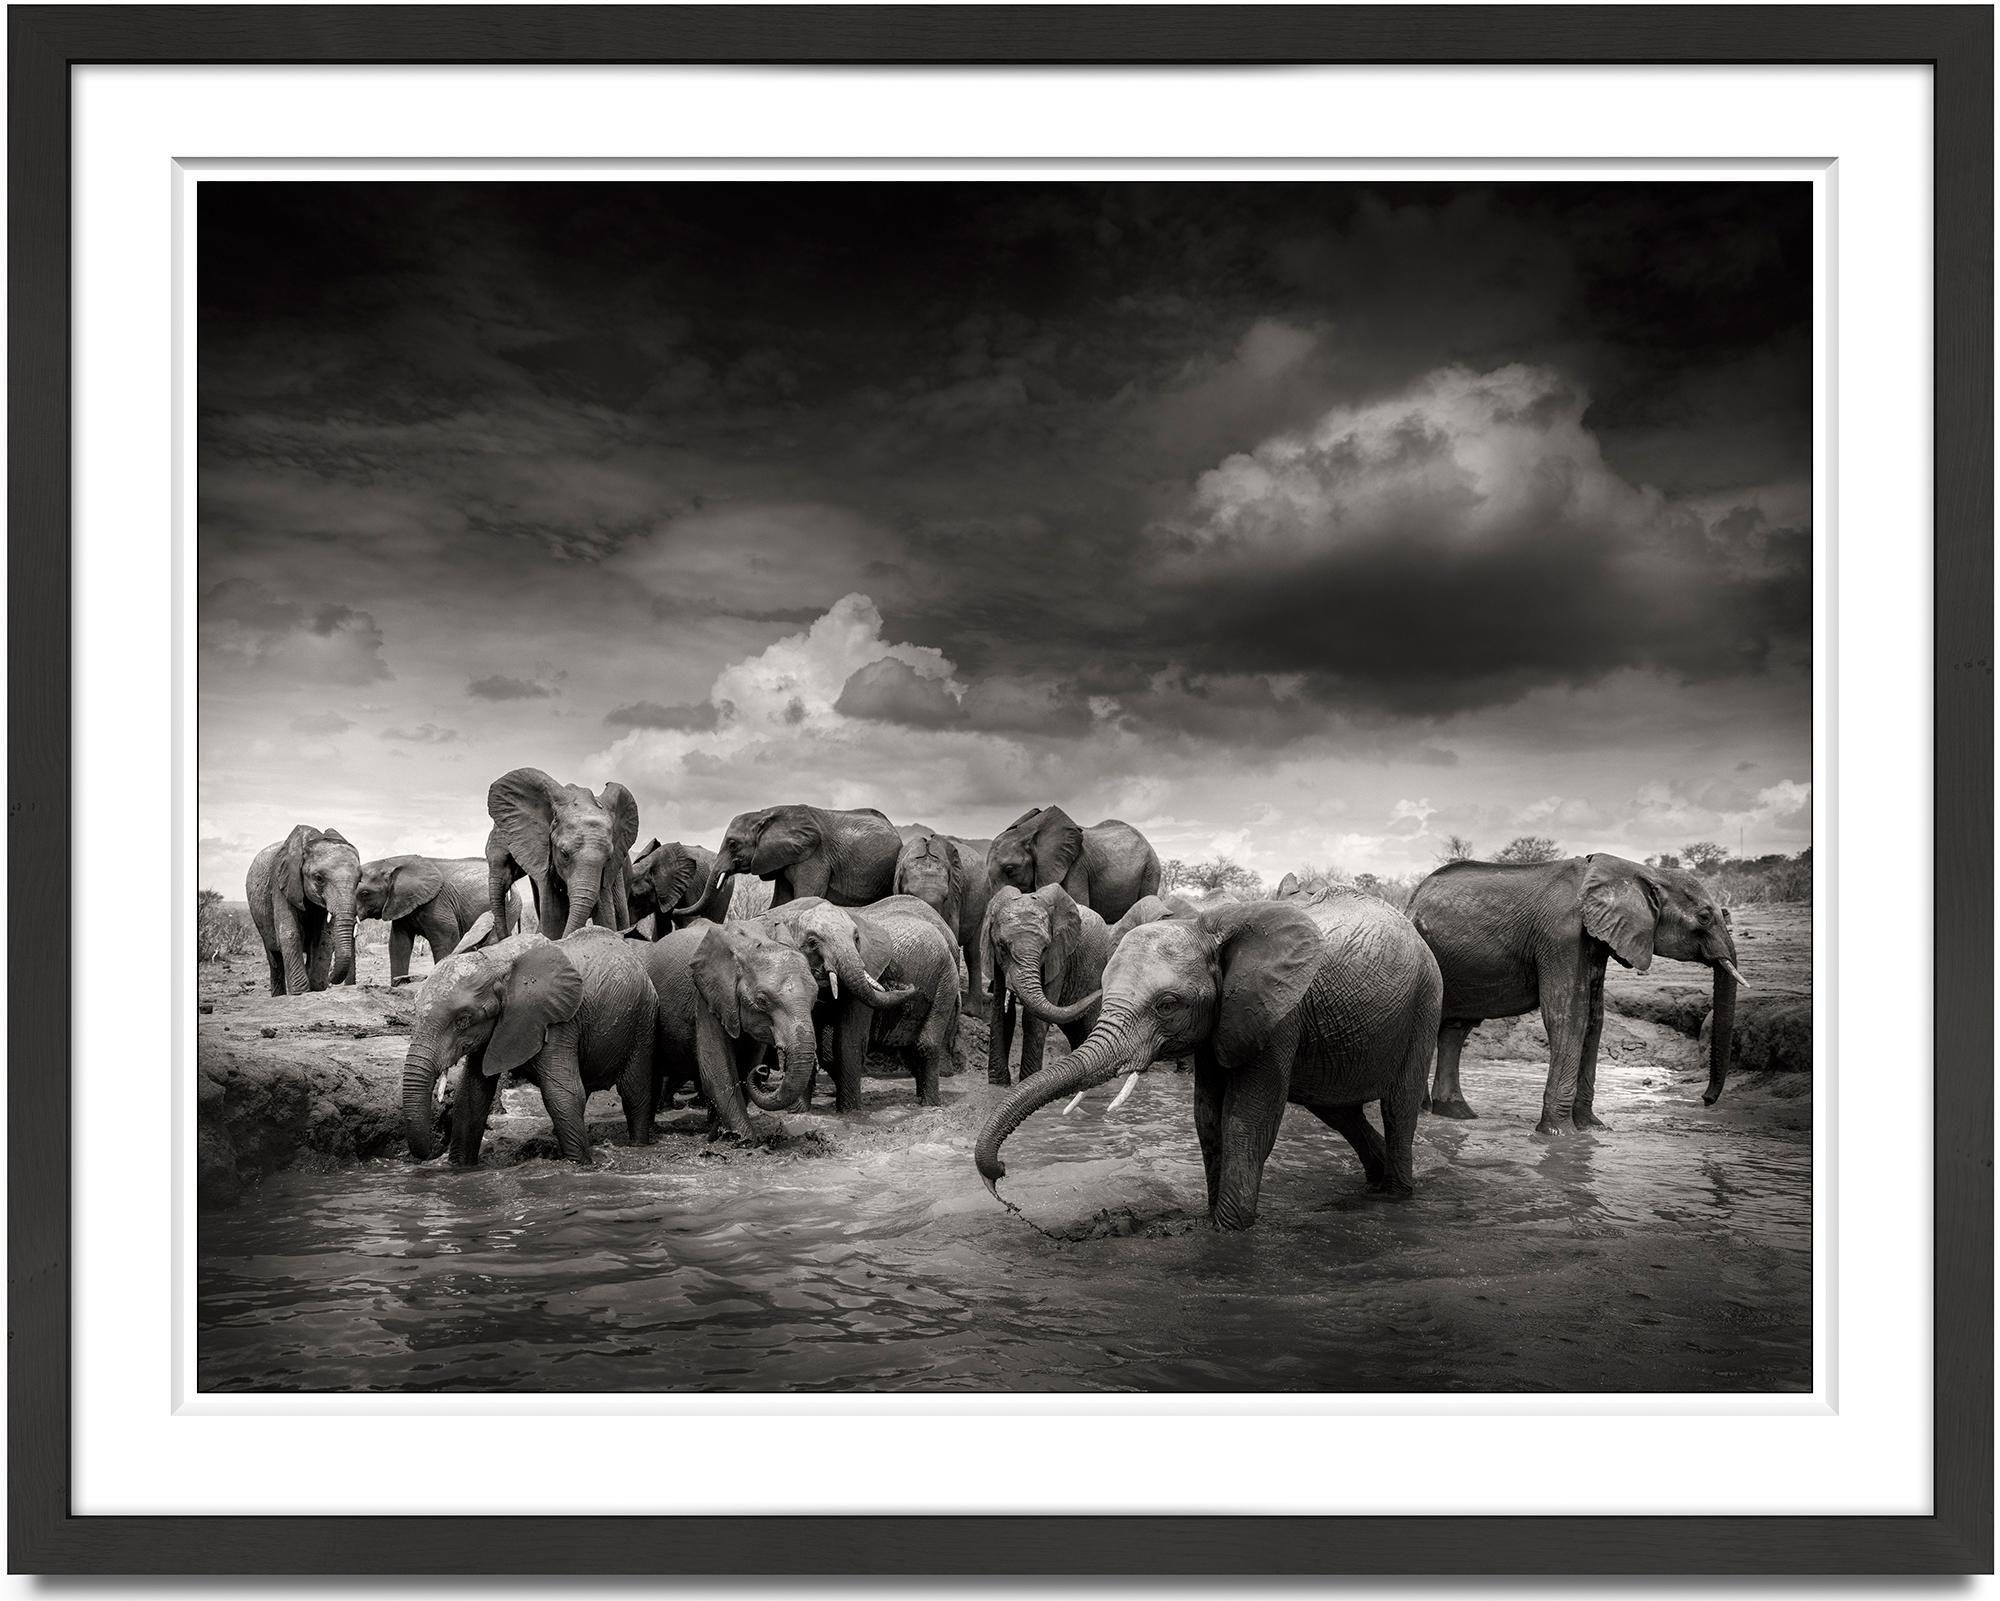 Mudbath IV, elephant, animal, wildlife, black and white photography, africa - Photograph by Joachim Schmeisser